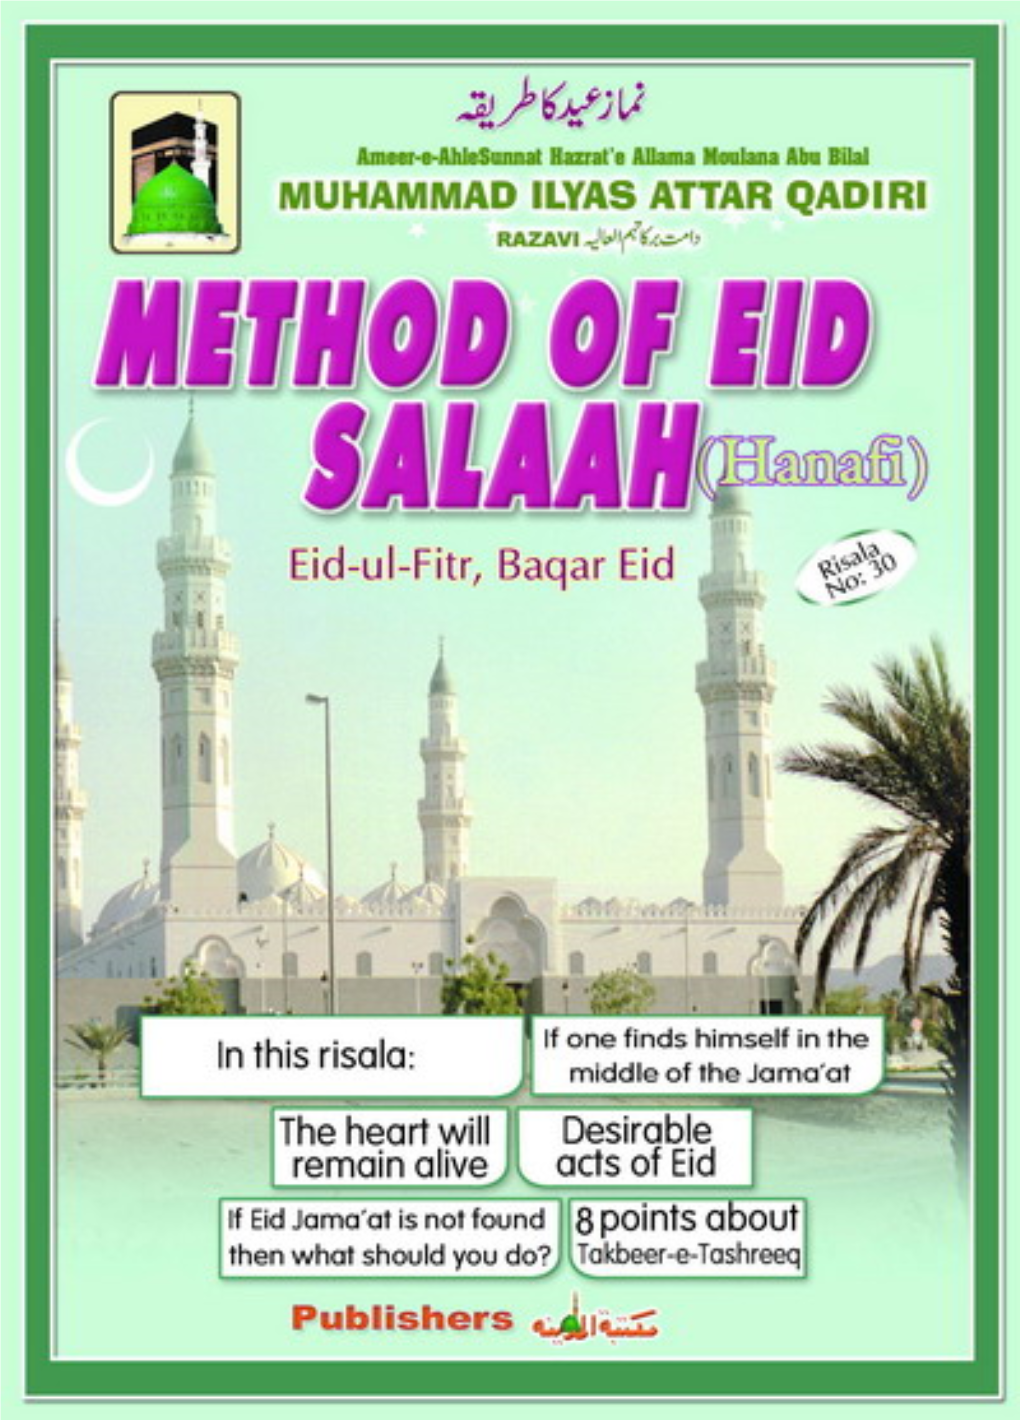 Method of Eid Prayer